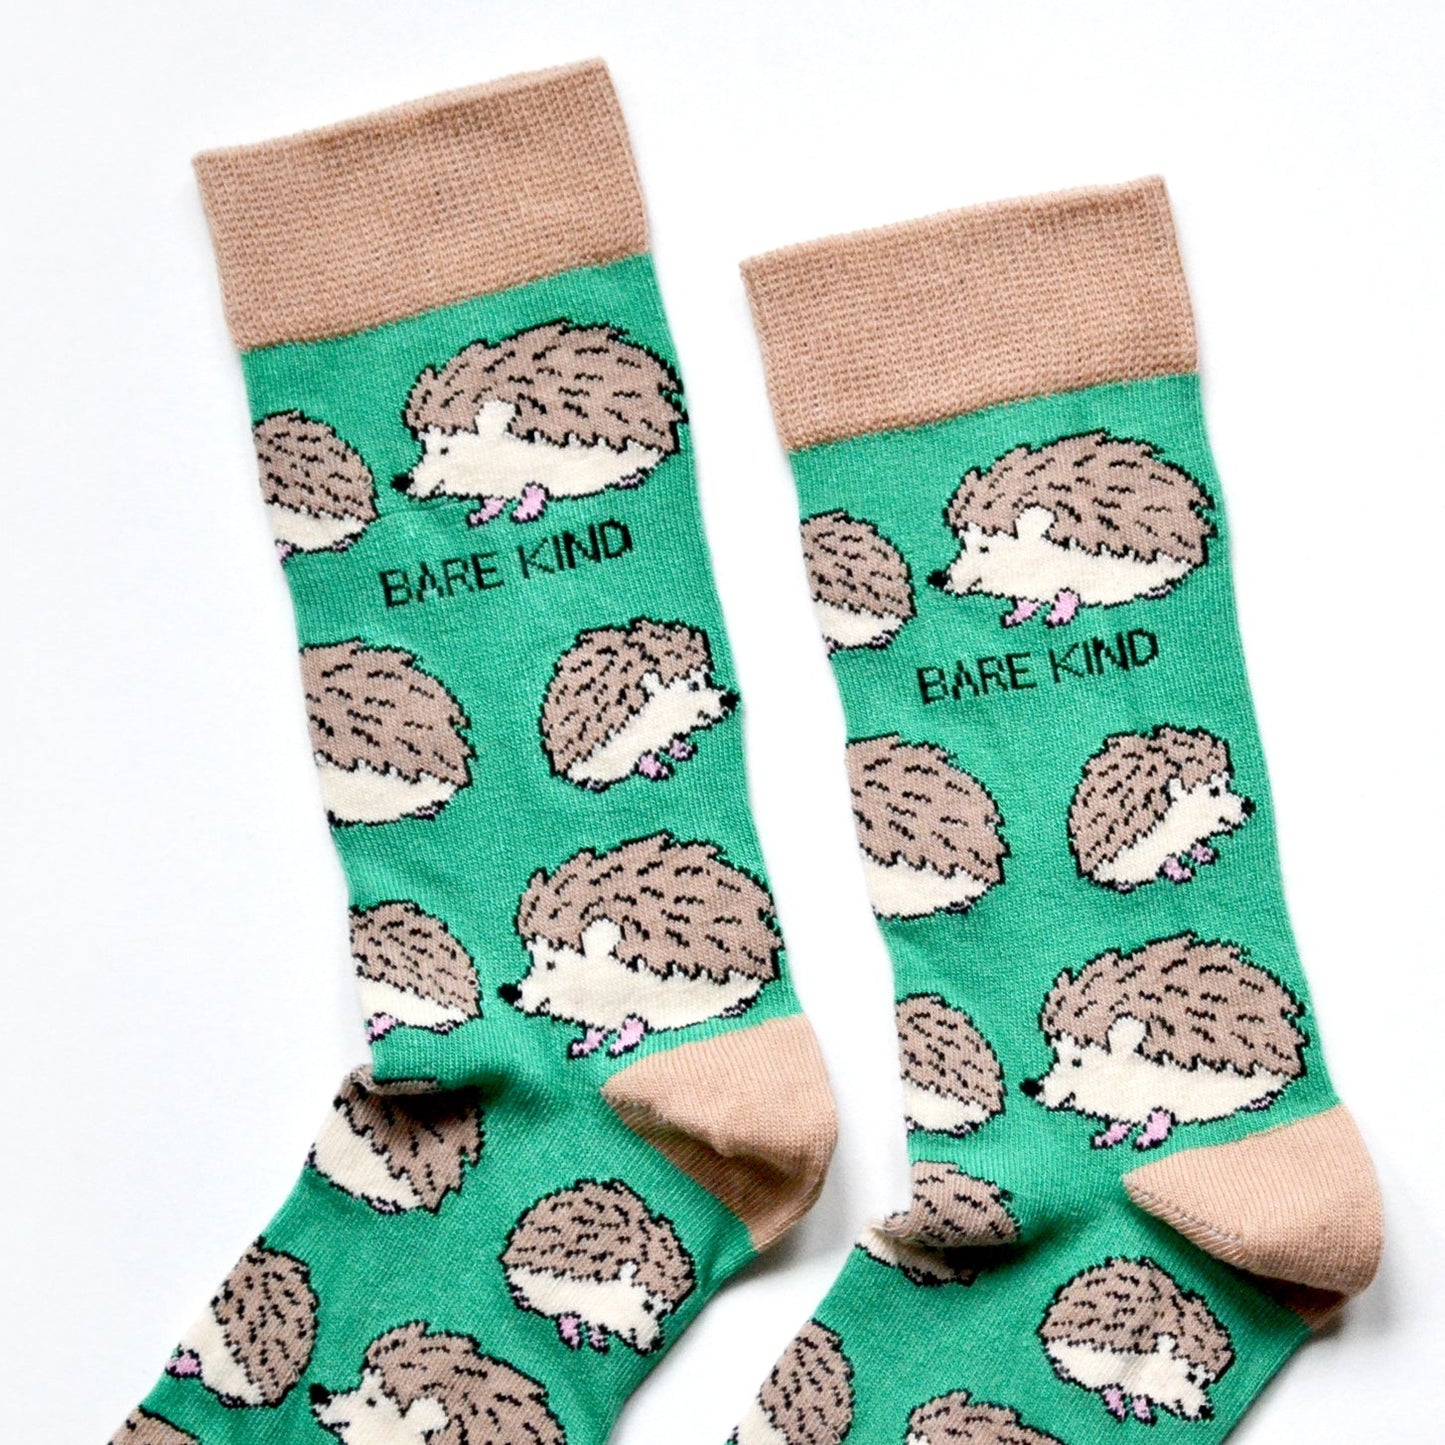 Bare Kind Bamboo Socks - Save the Hedgehog (brown)